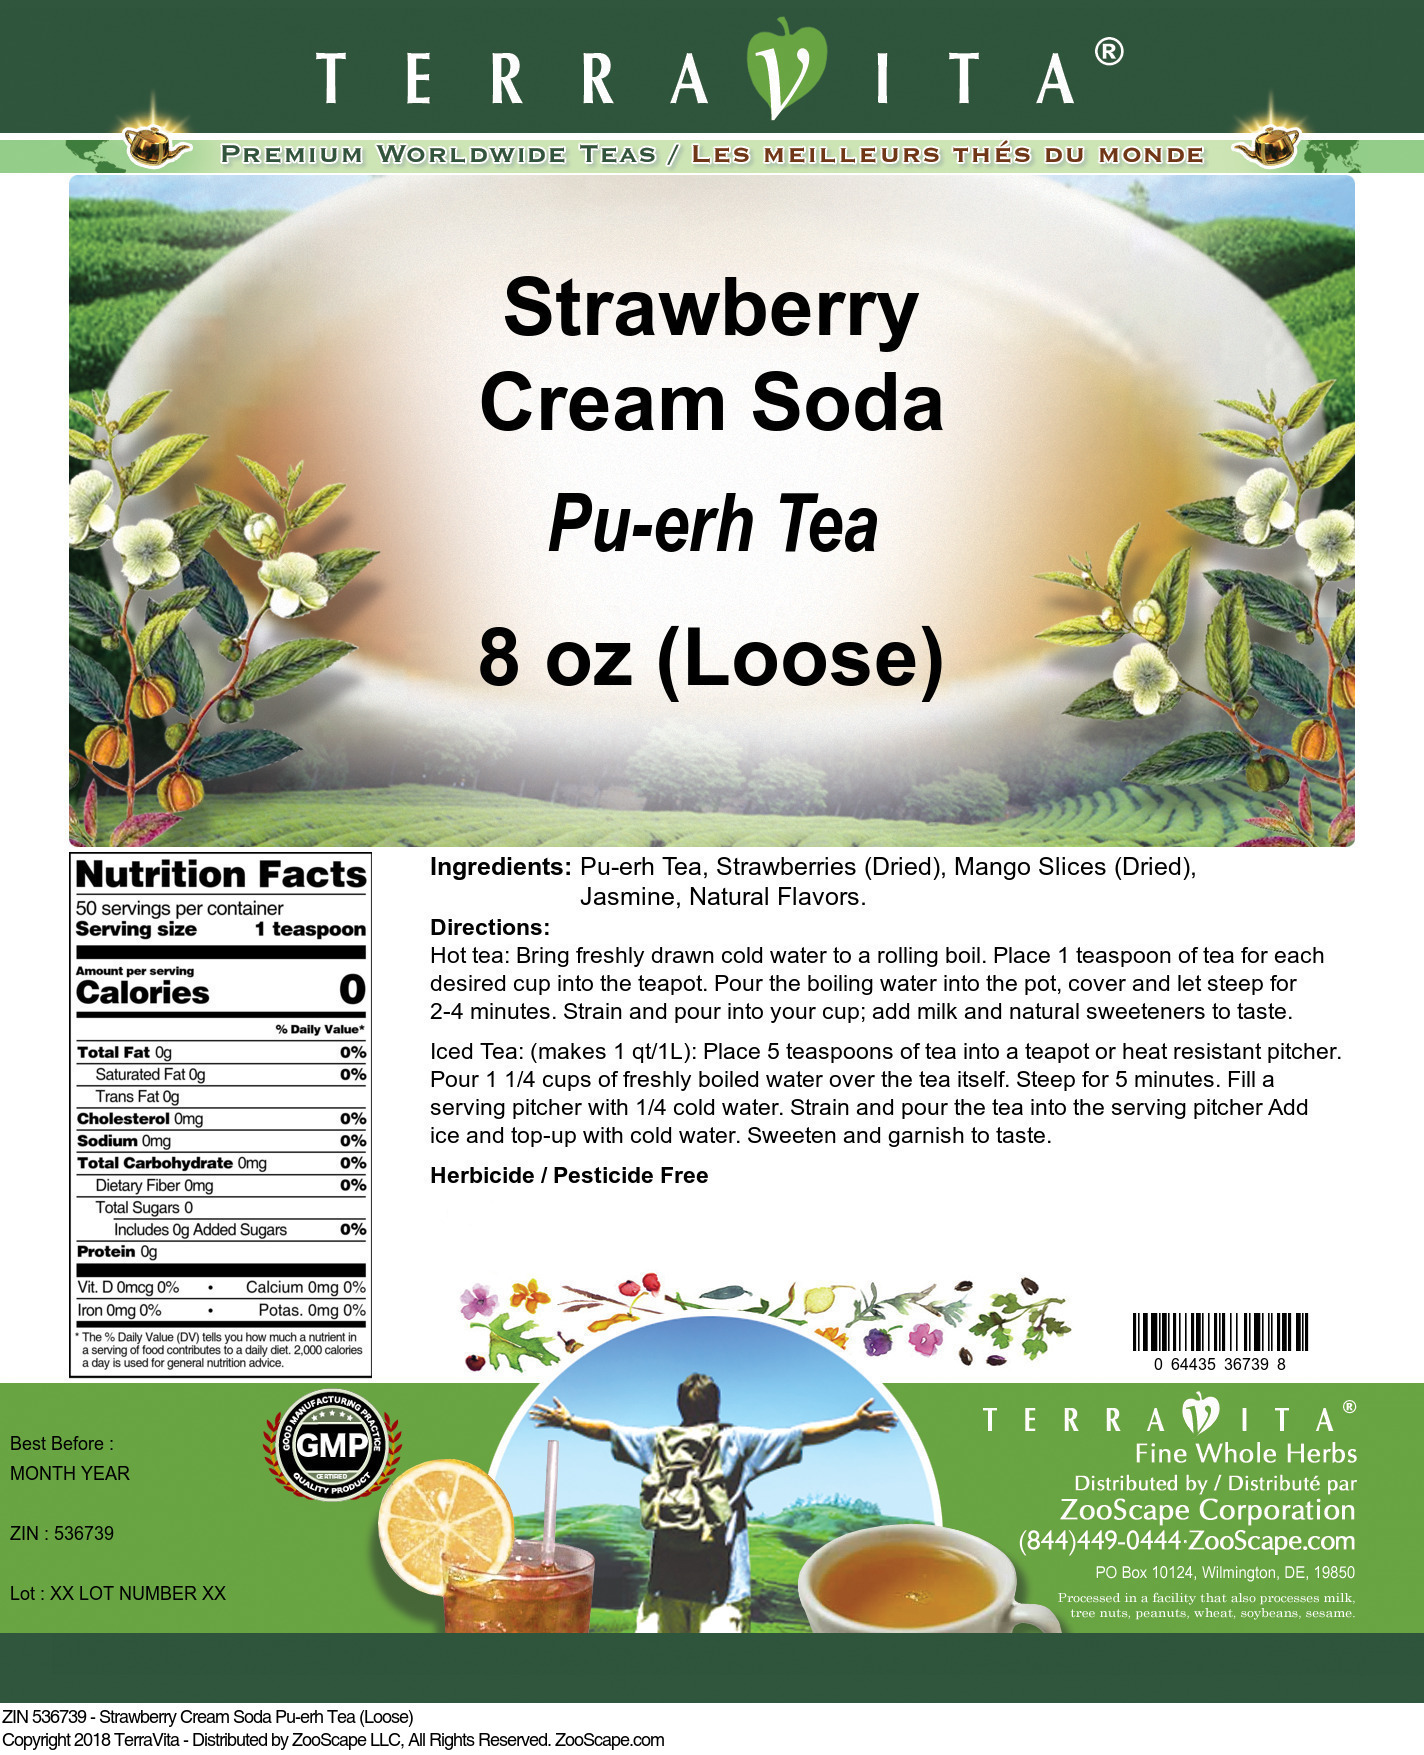 Strawberry Cream Soda Pu-erh Tea (Loose) - Label